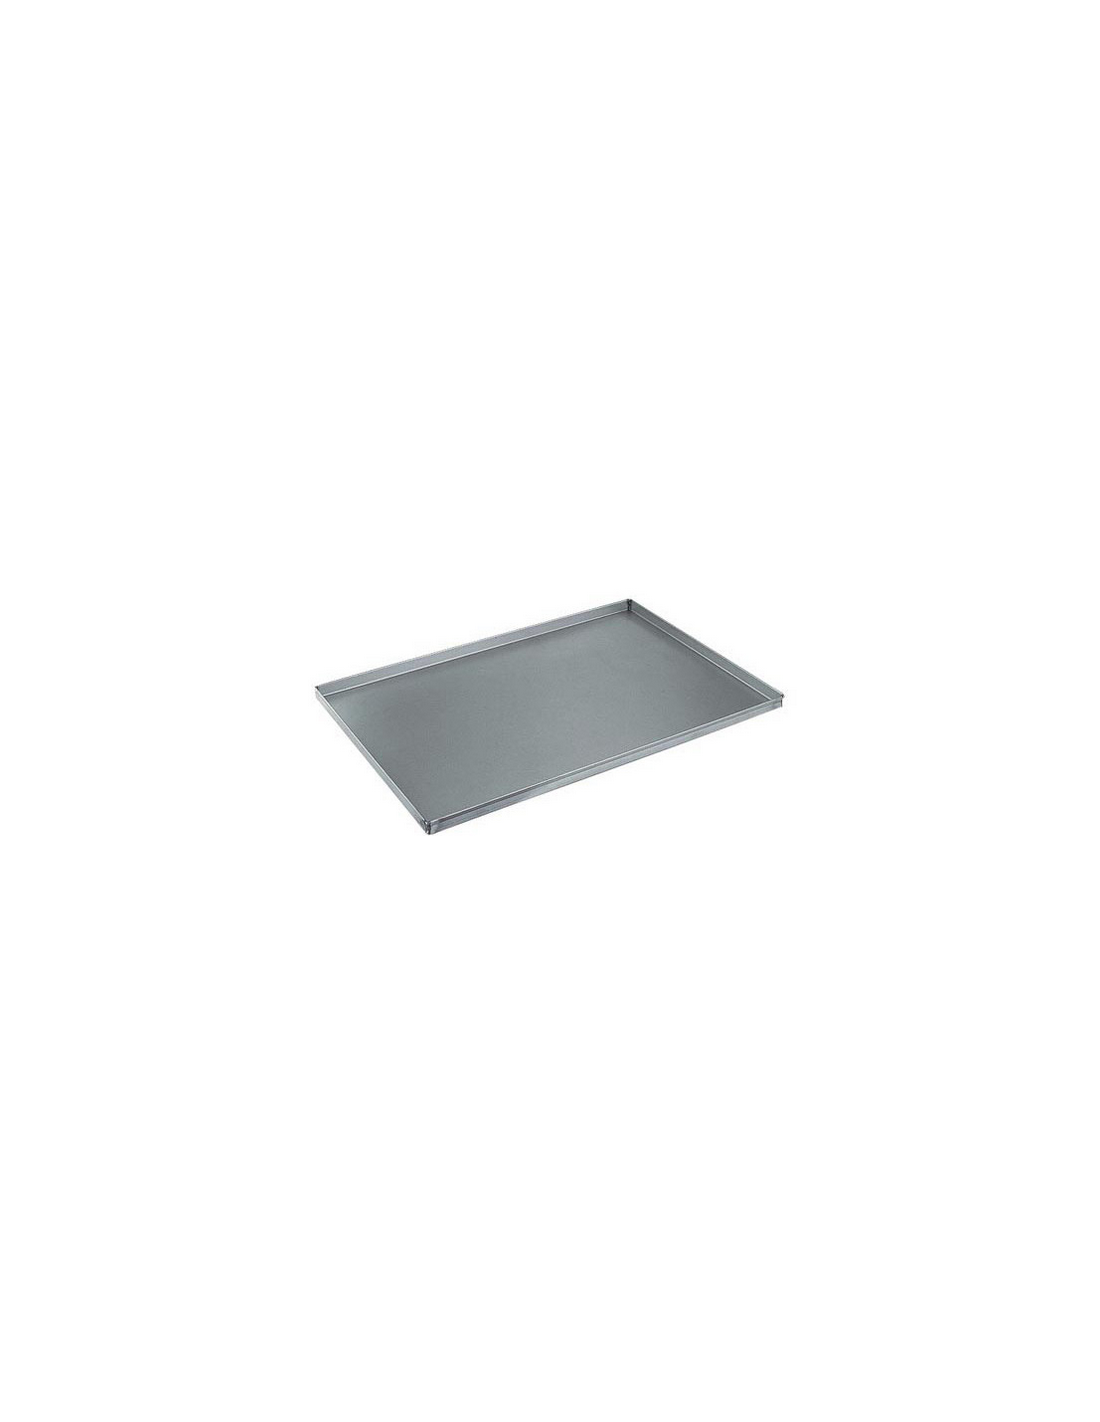 Aluminium tray EN cm 60 x 40 - h 20 mm